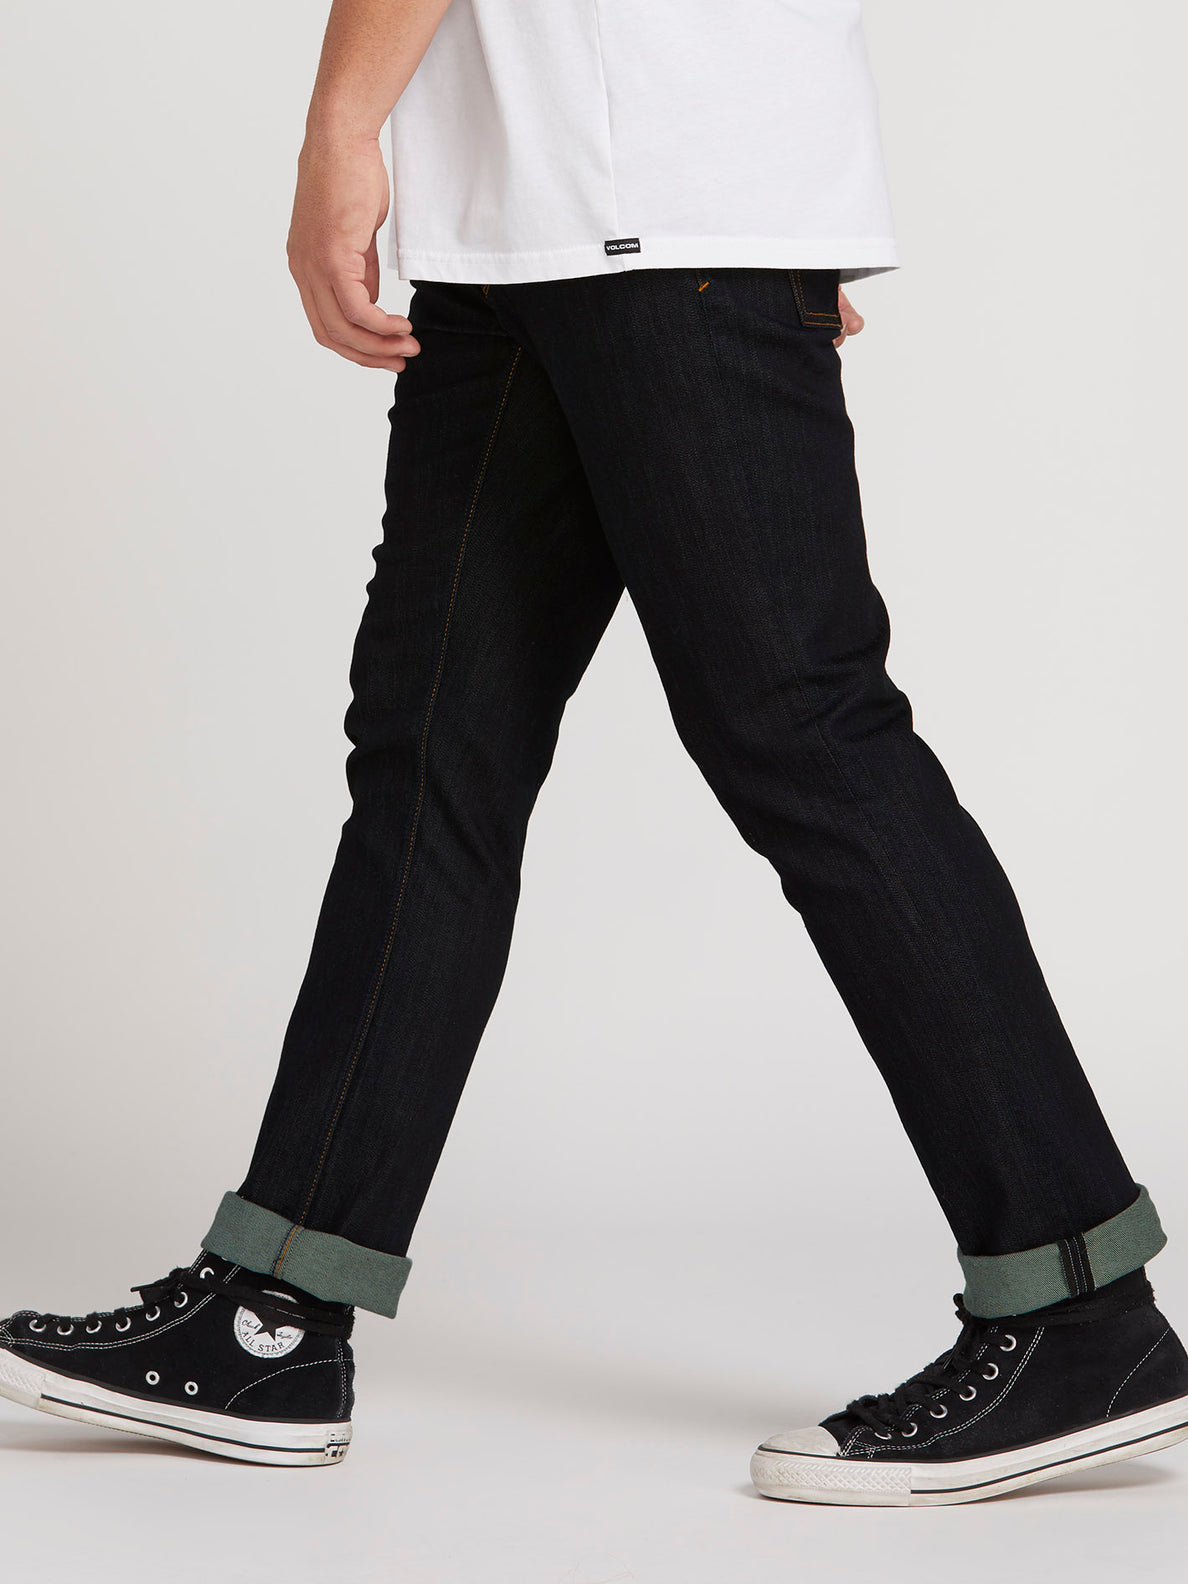 Vorta Slim Fit Jeans - Rinse (A1931501_RNS) [3]